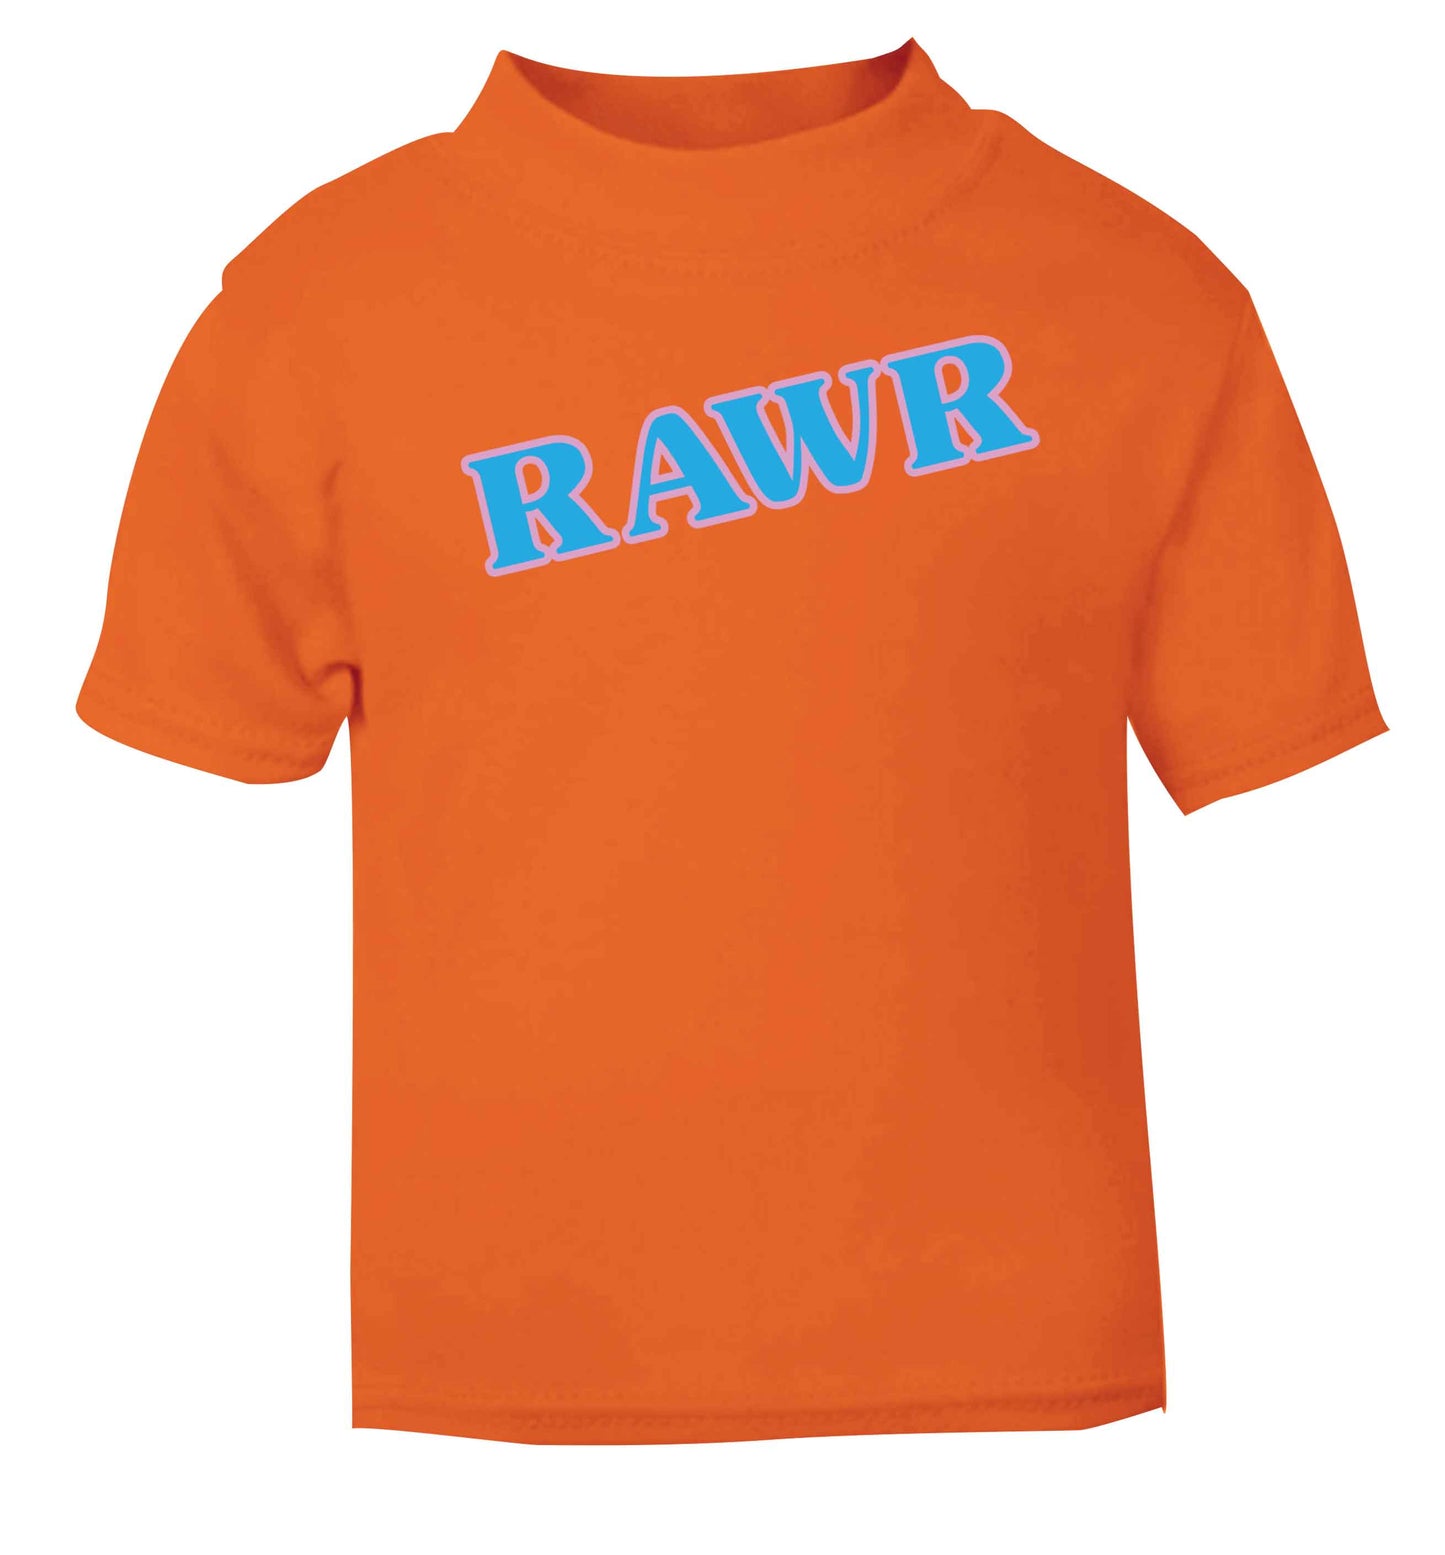 Rawr orange baby toddler Tshirt 2 Years